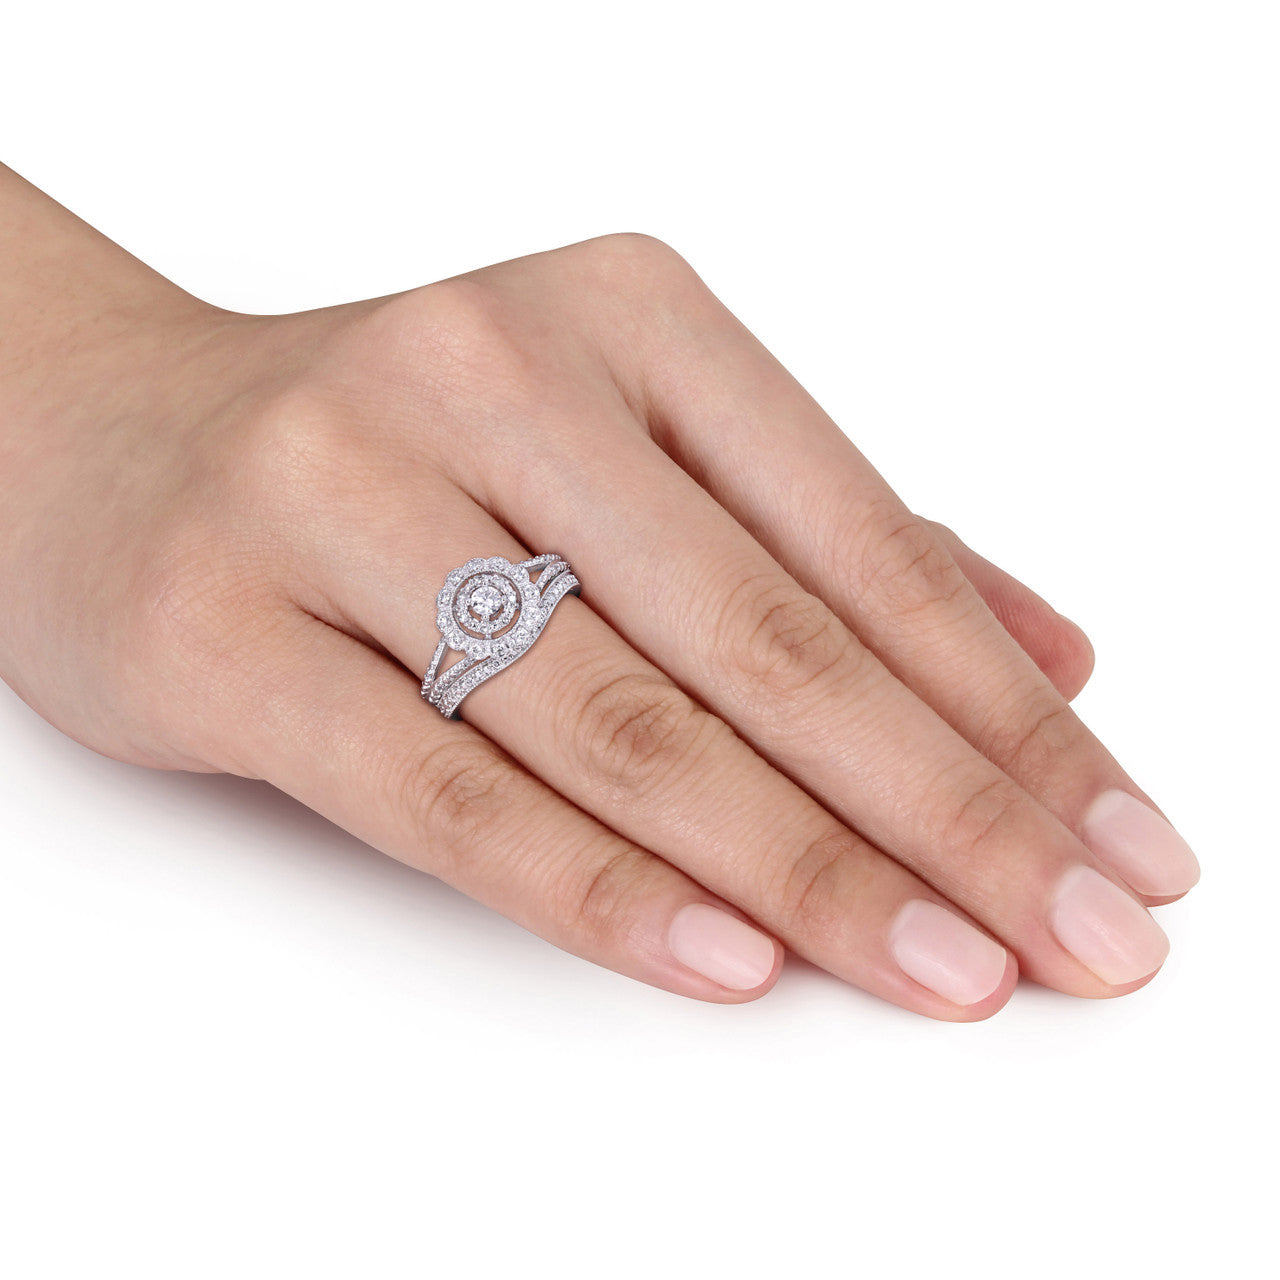 Ice Jewellery 1/3 CT Diamond TW Fashion Ring in 10k White Gold - 75000004446 | Ice Jewellery Australia